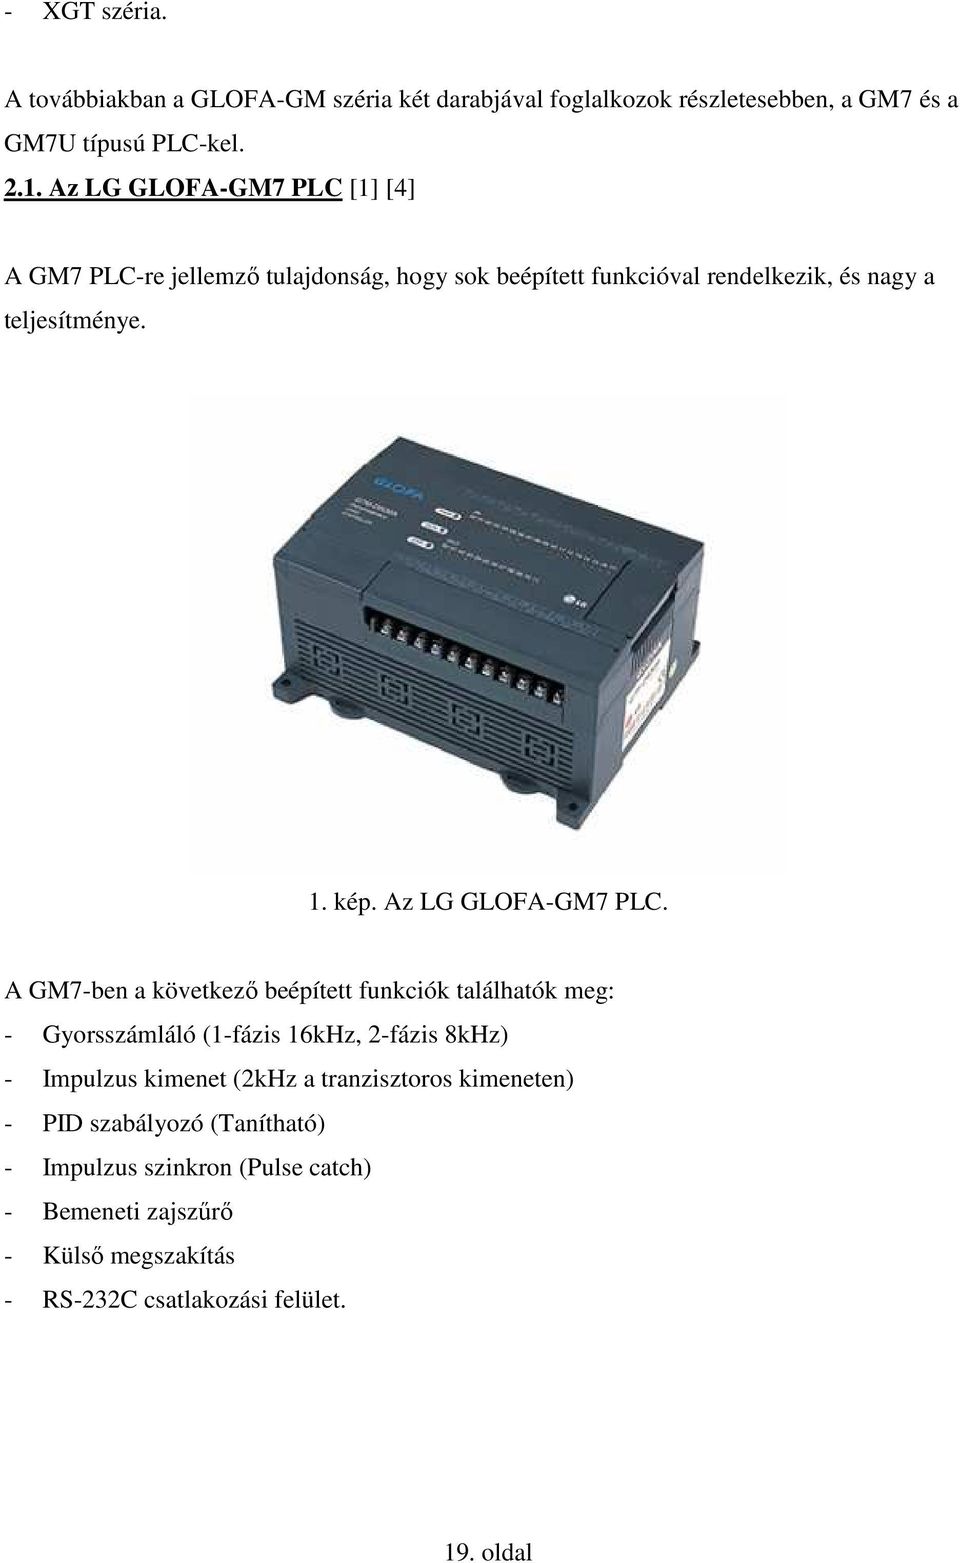 Az LG GLOFA-GM7 PLC.